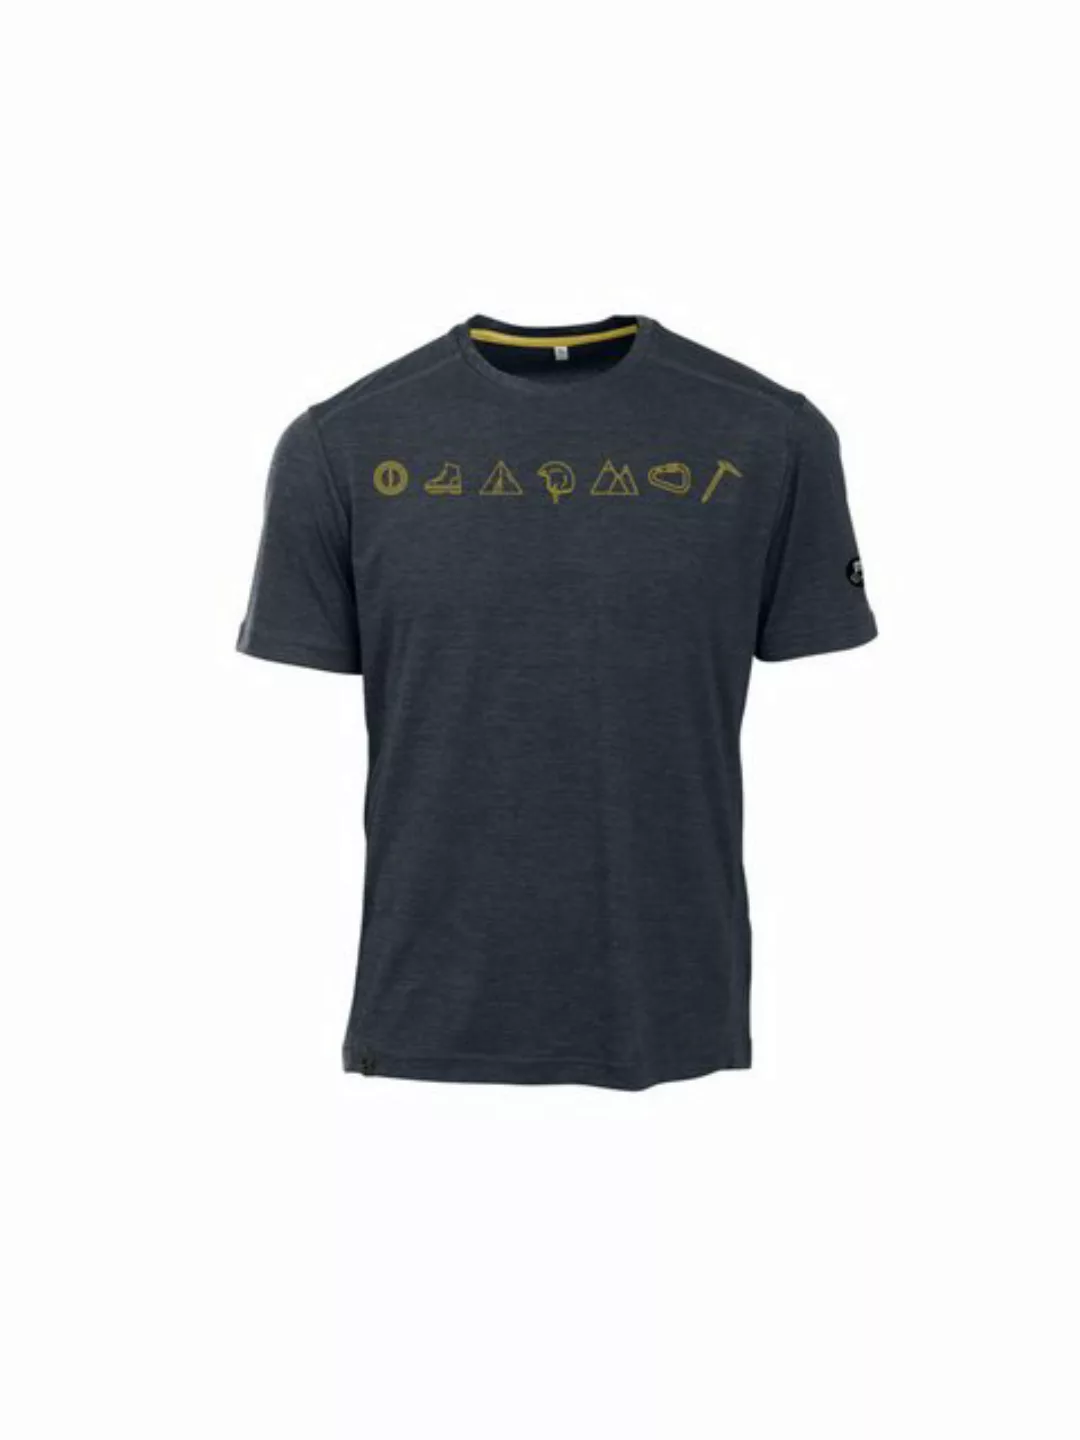 Maul Kurzarmshirt Grinberg fresh - 1/2 T-Shirt+Print - dark grey günstig online kaufen